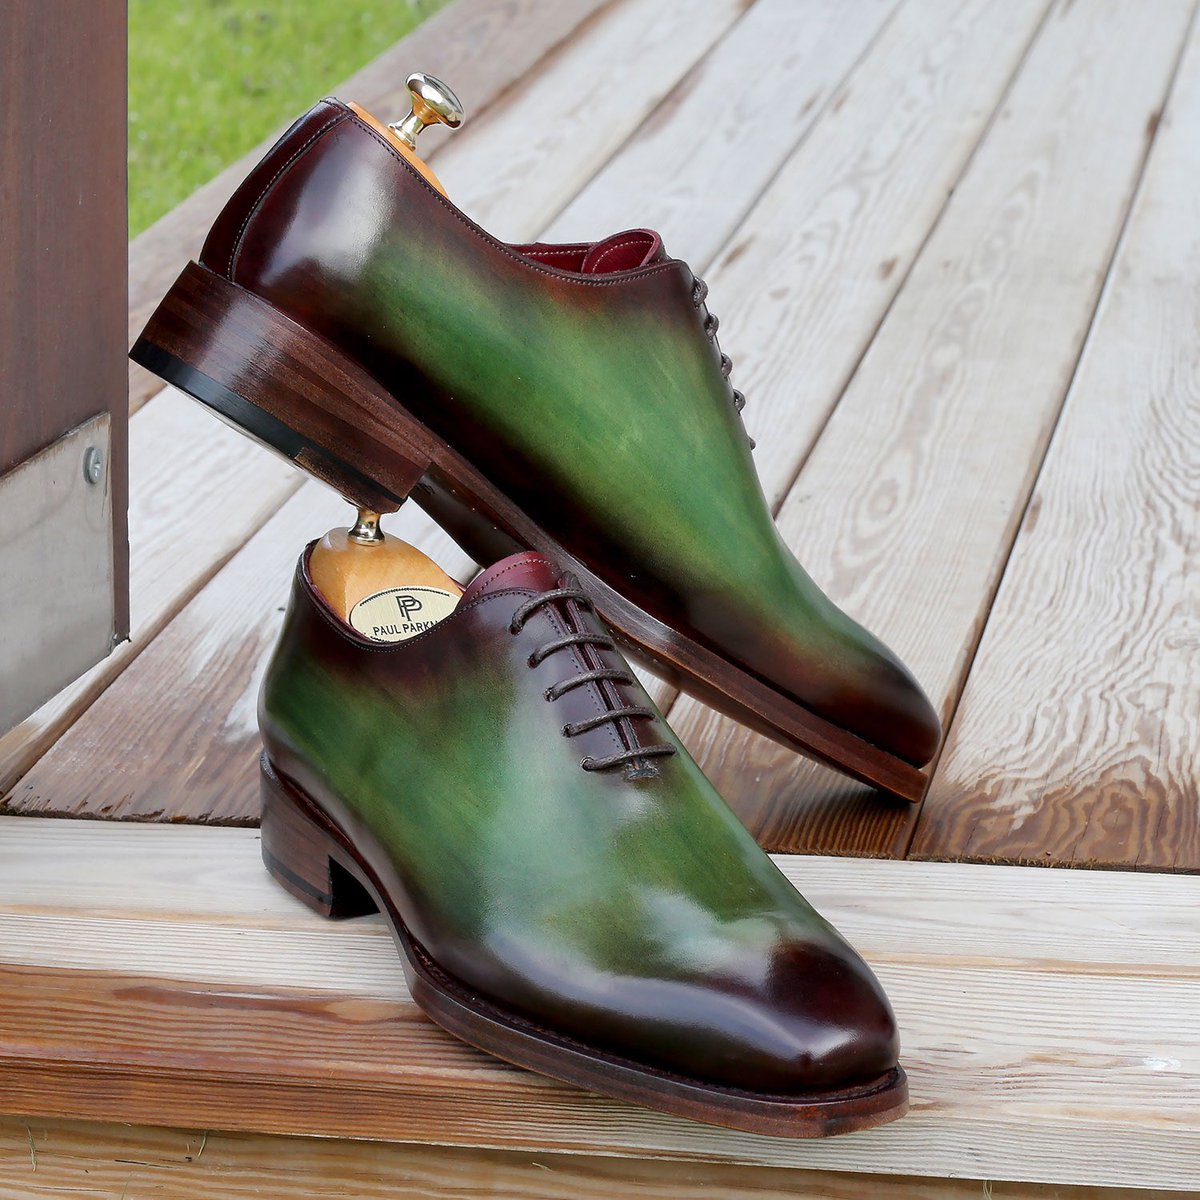 Paul Parkman Men's Brown & Green Plain Toe Oxford Shoes

Website: paulparkman.com

#paulparkman #oxfordshoes #patinashoes #handmadeshoes #bespokeshoes #Luxuryshoes #mensshoes #goodyearwelted #menstyle